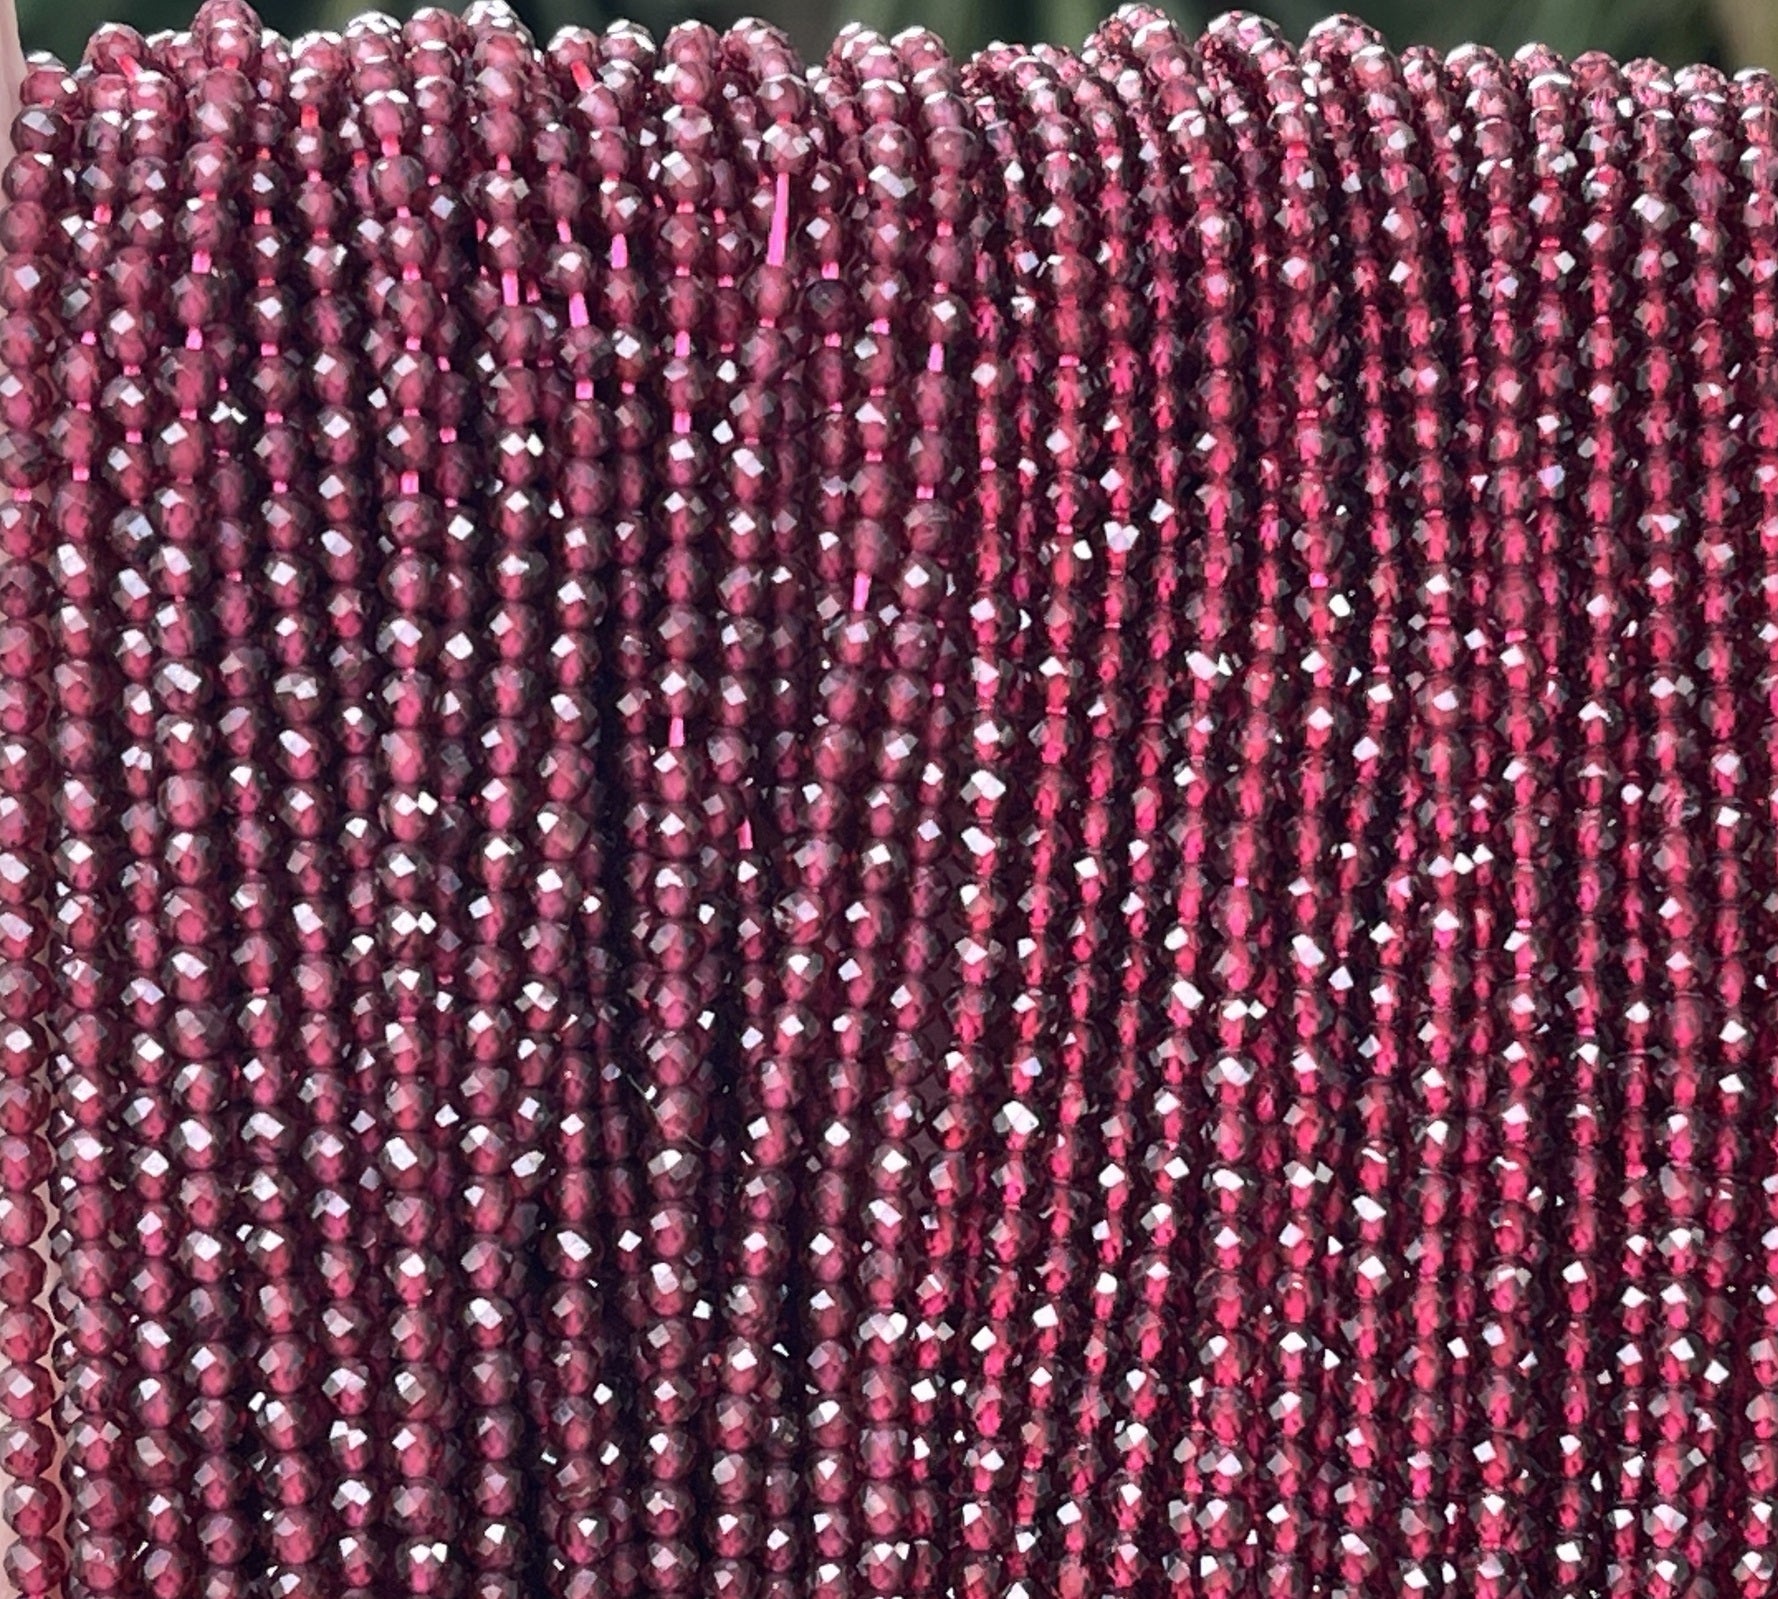 Red Garnet 3mm faceted round natural gemstone beads 15.5" strand